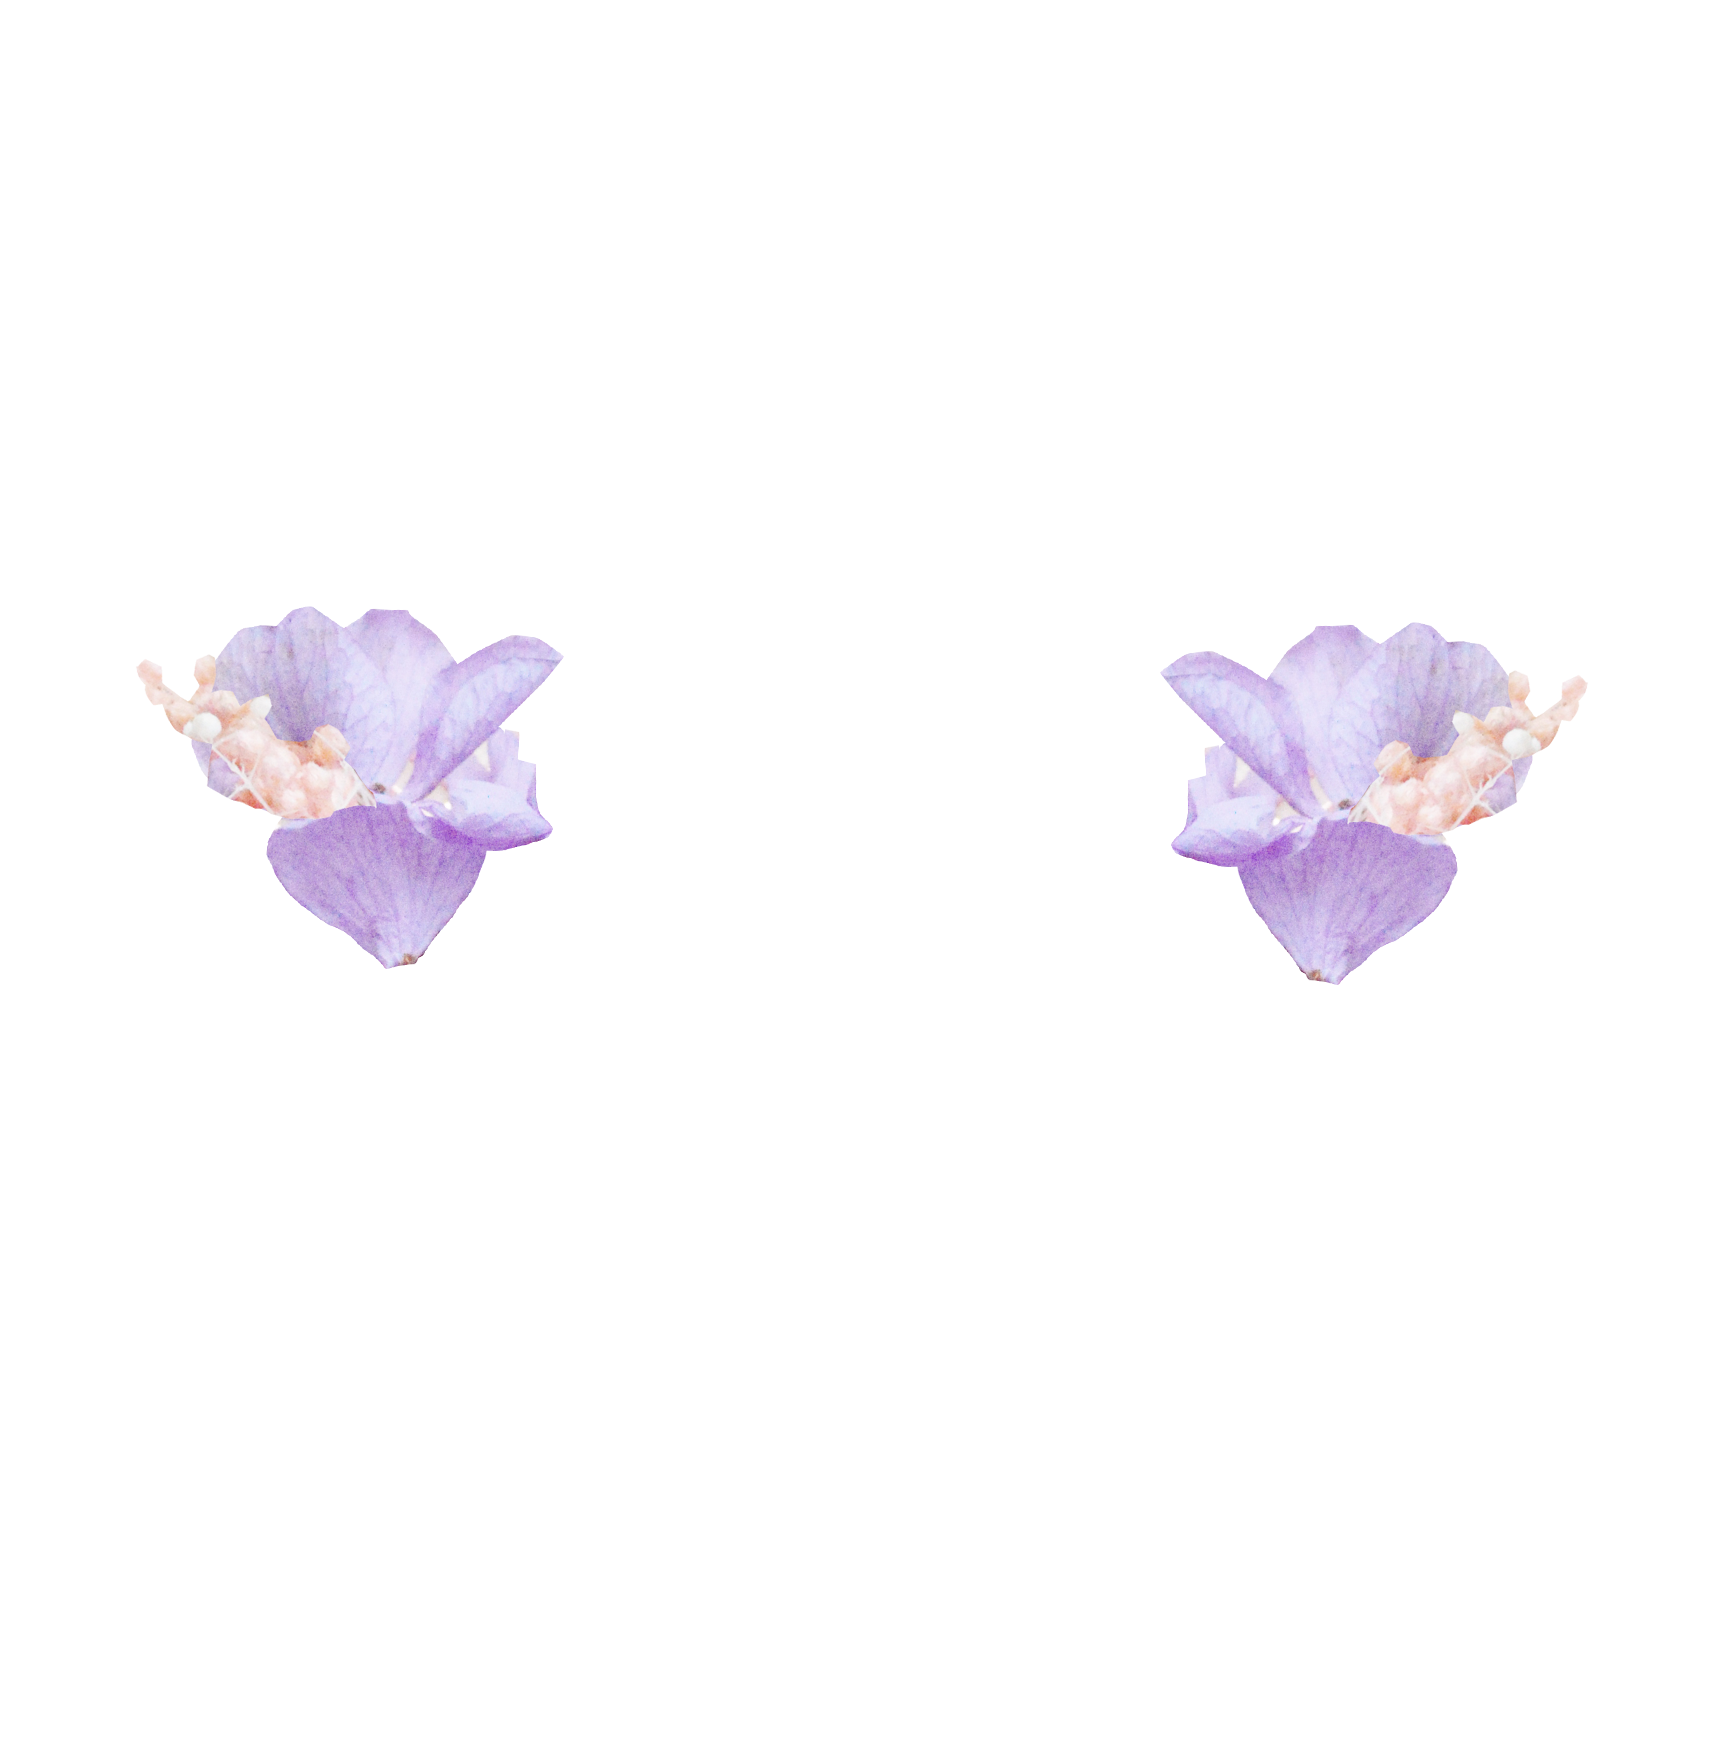 hortensias violettes